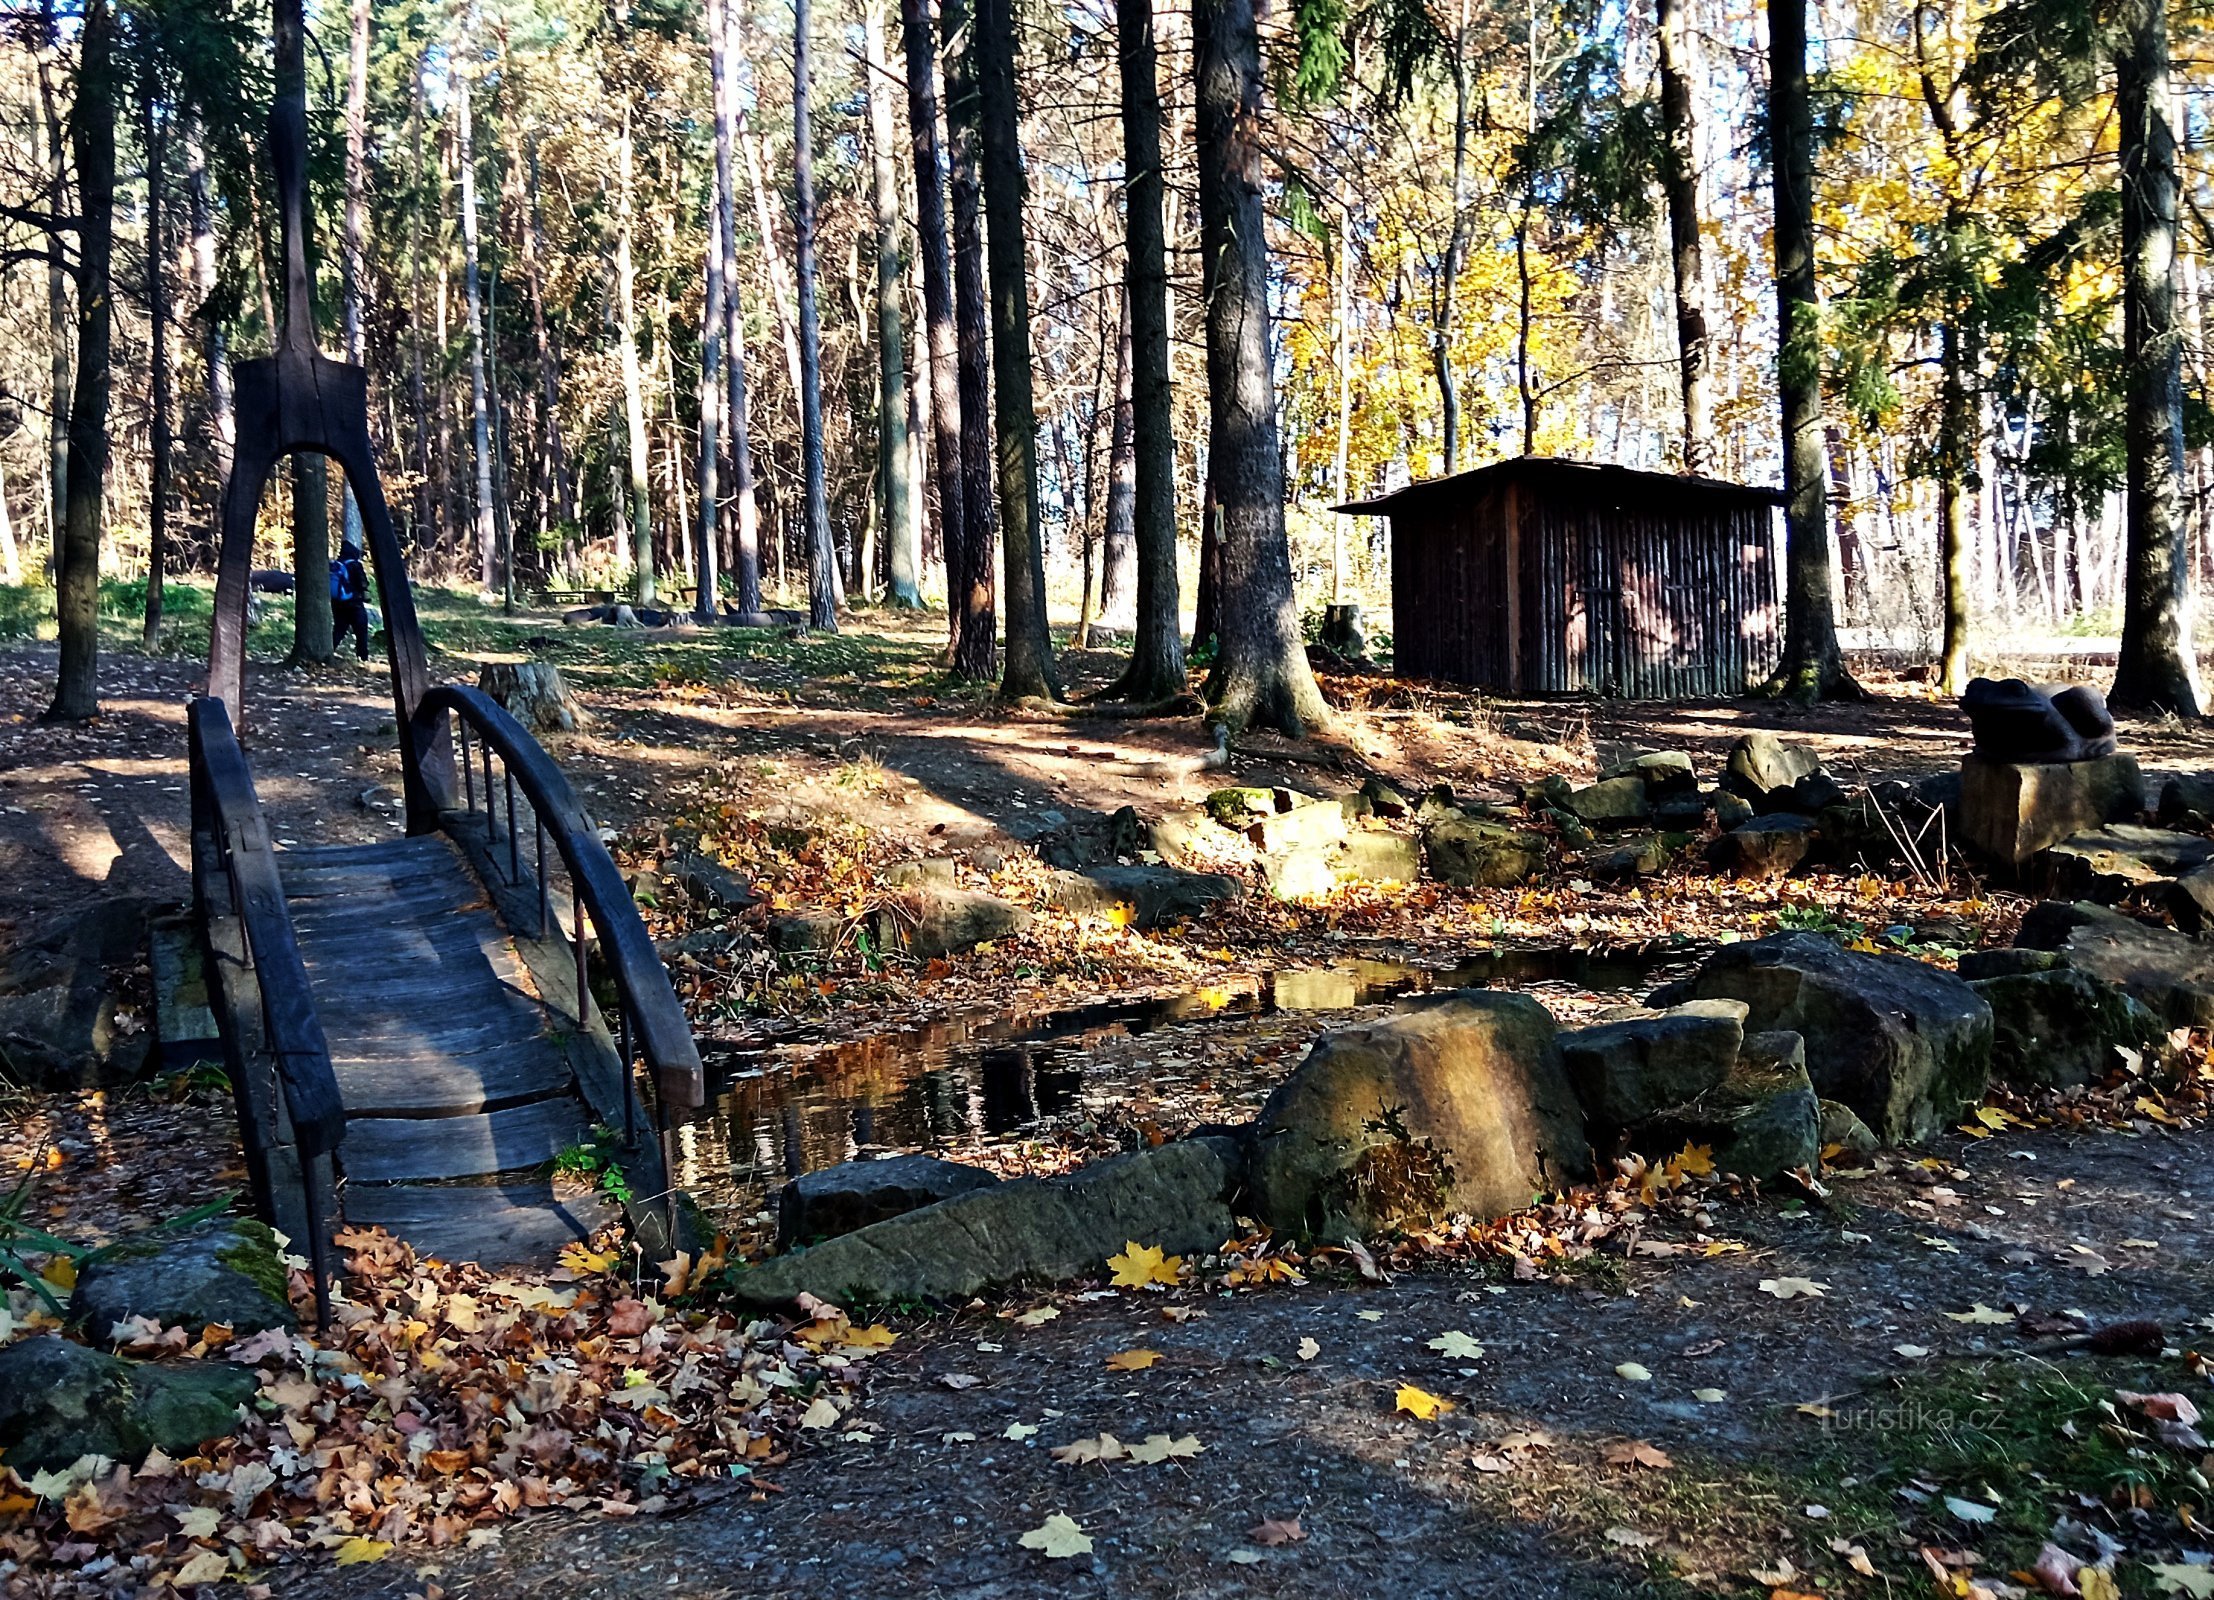 Pivečk forest park with an artificial ruin in Slavičín